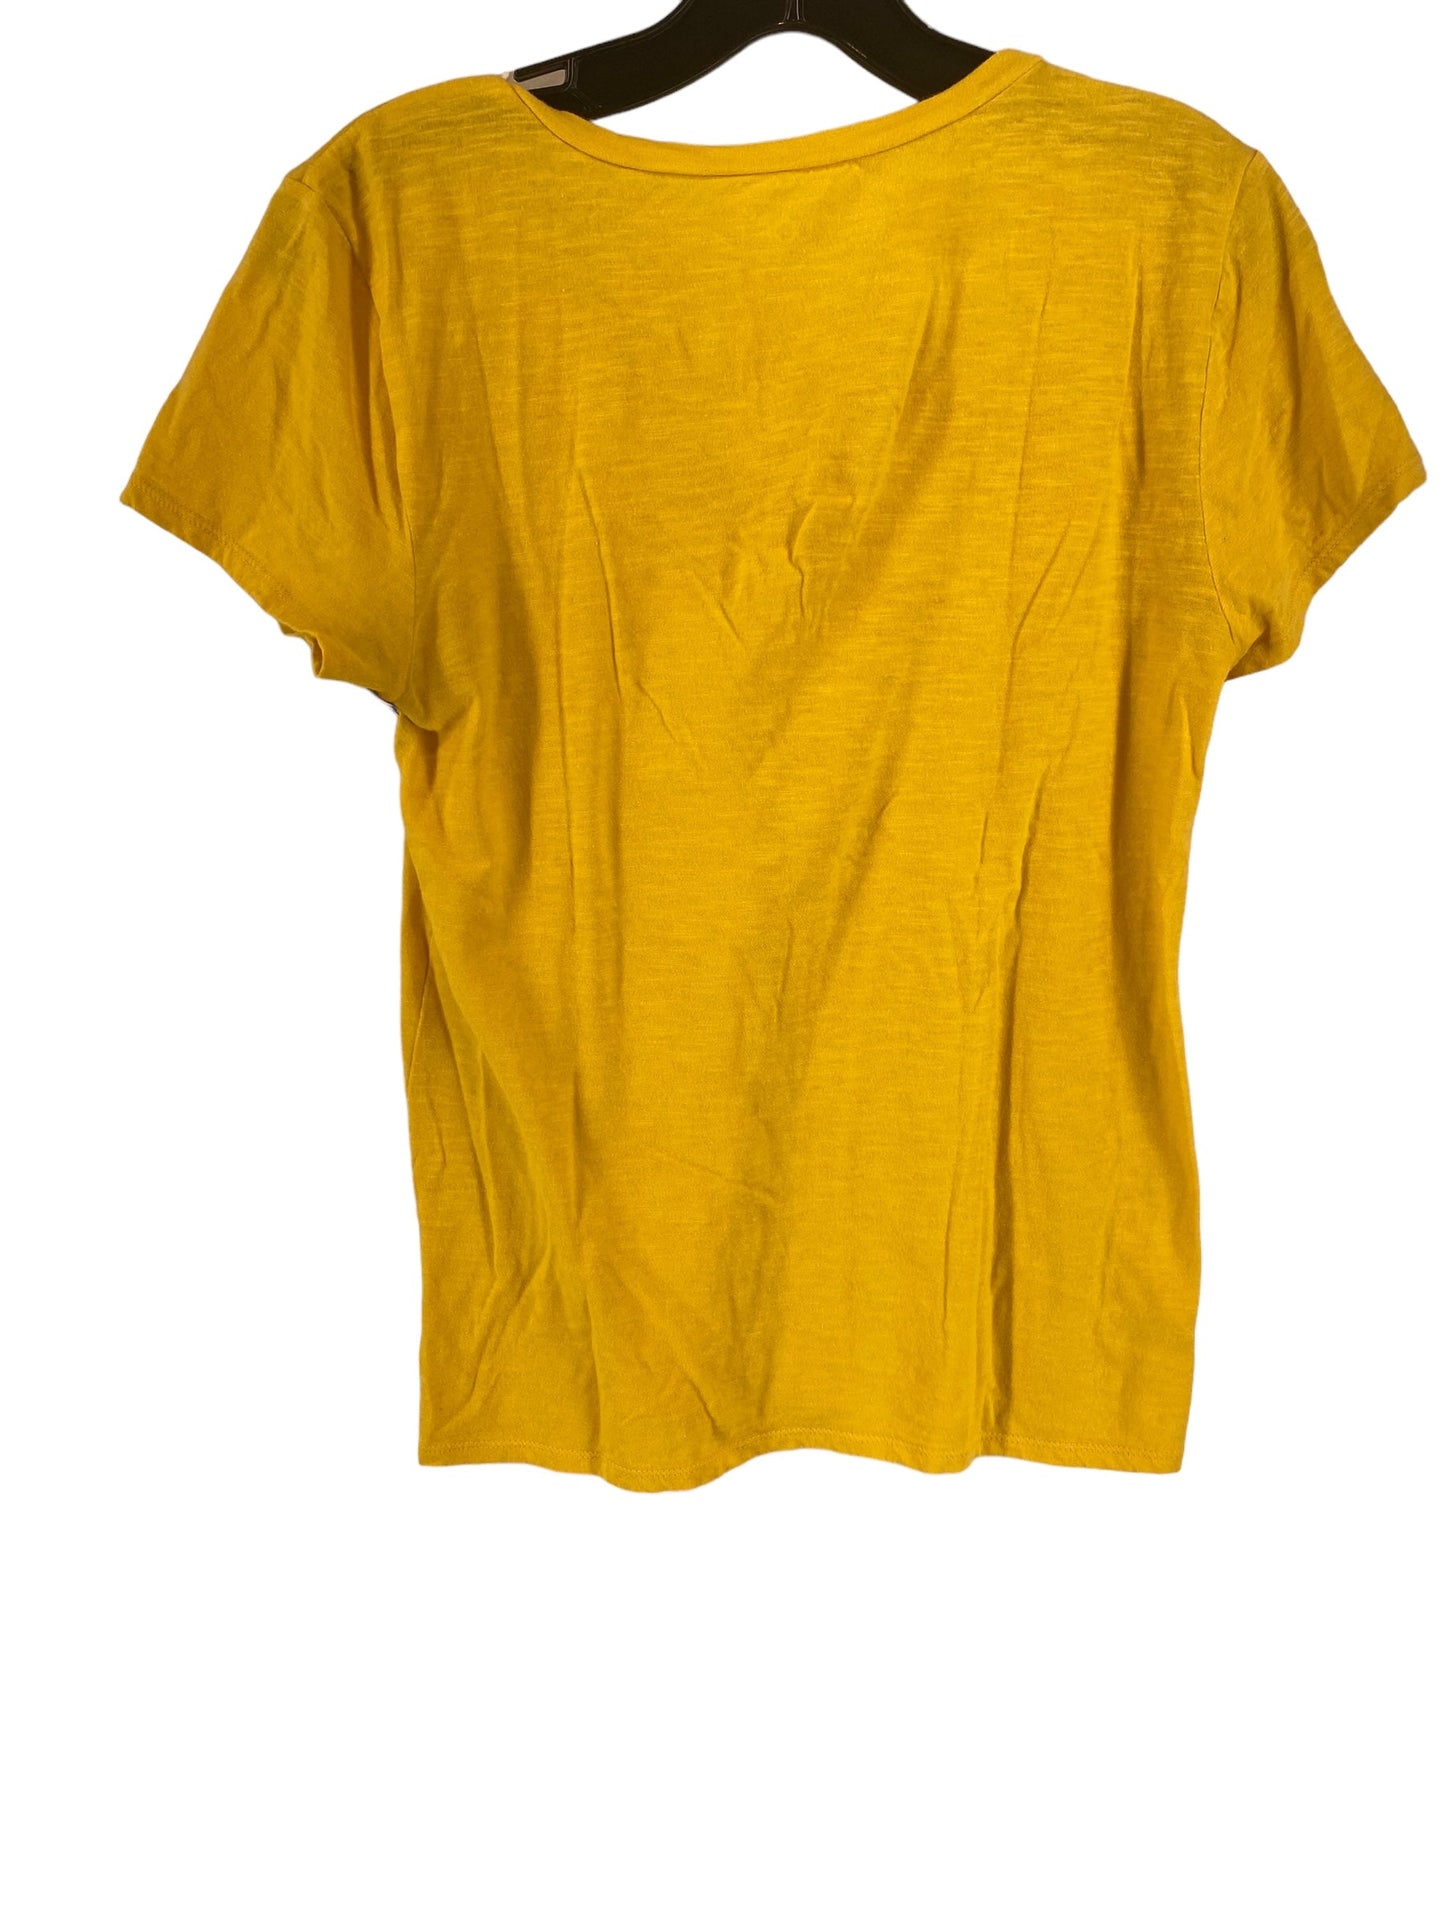 Yellow Top Short Sleeve Loft, Size Xs